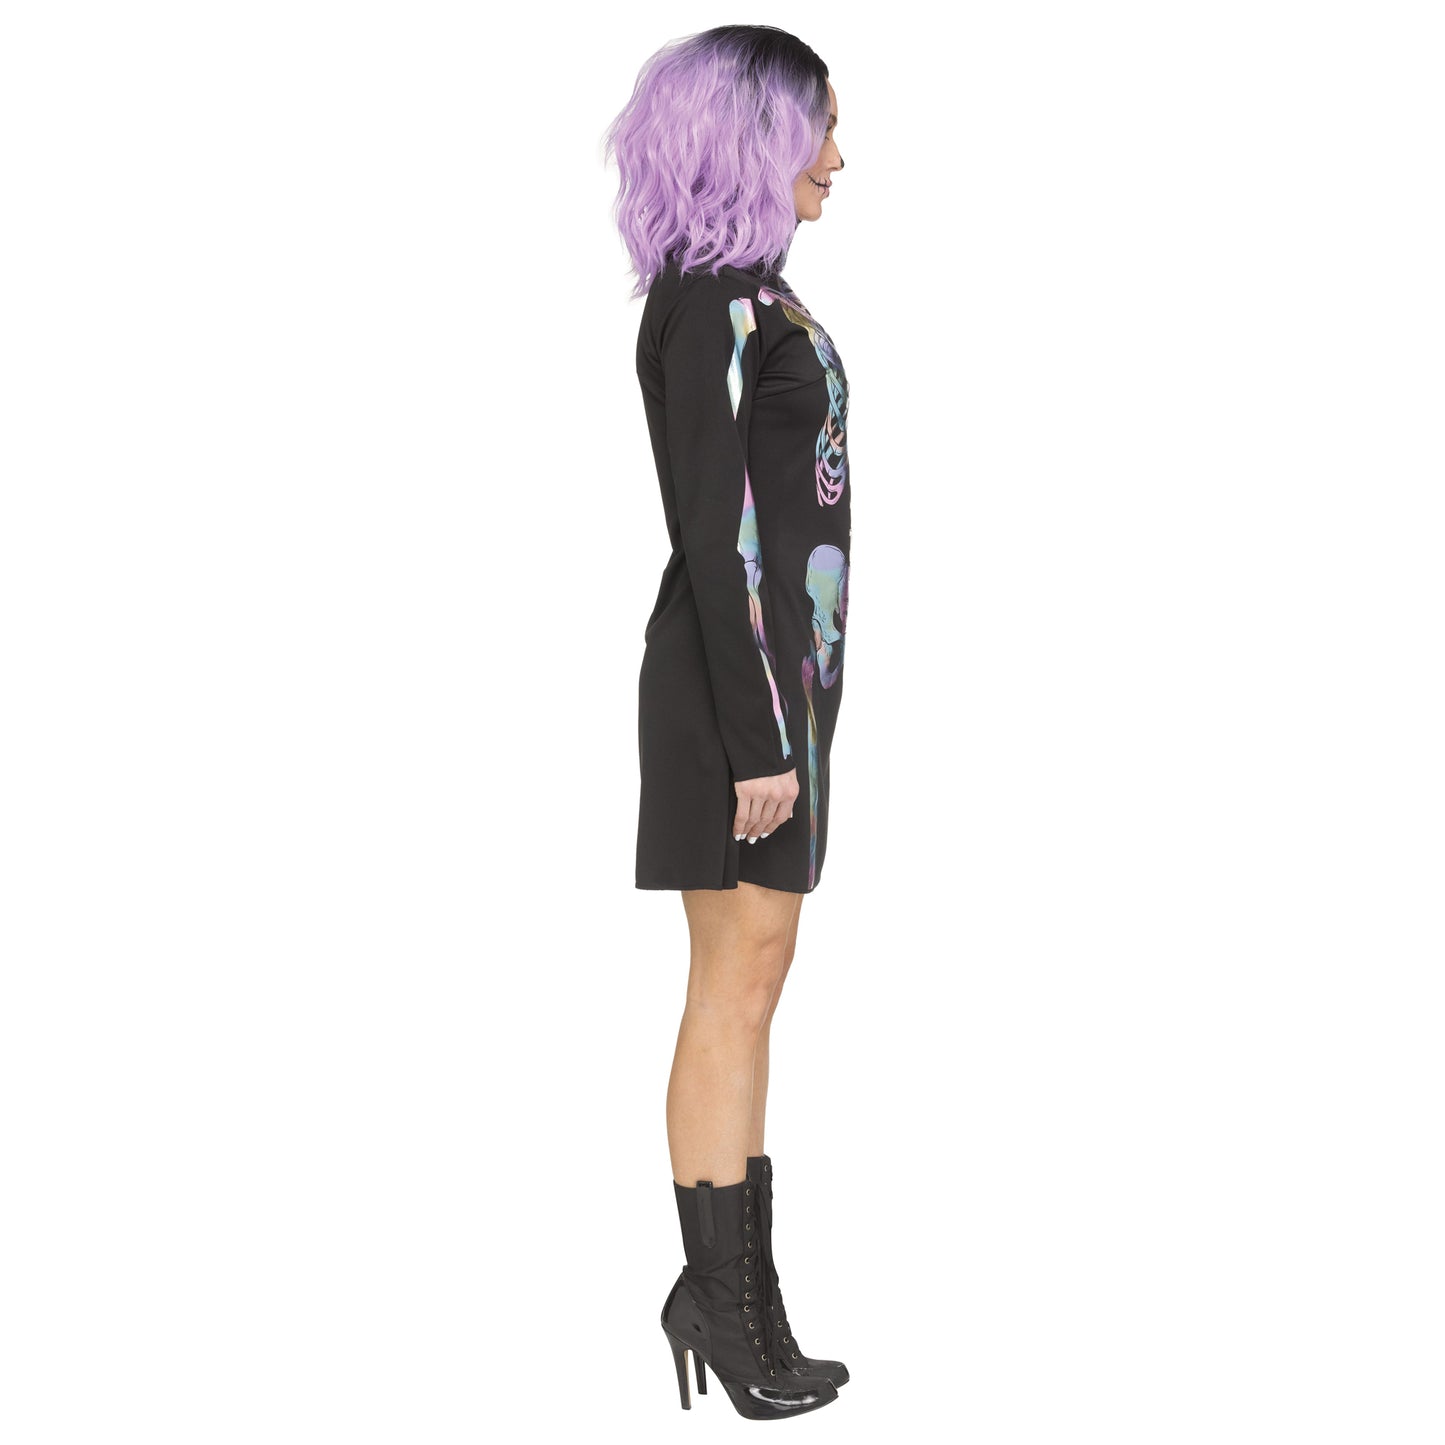 Holographic Skeleton Dress